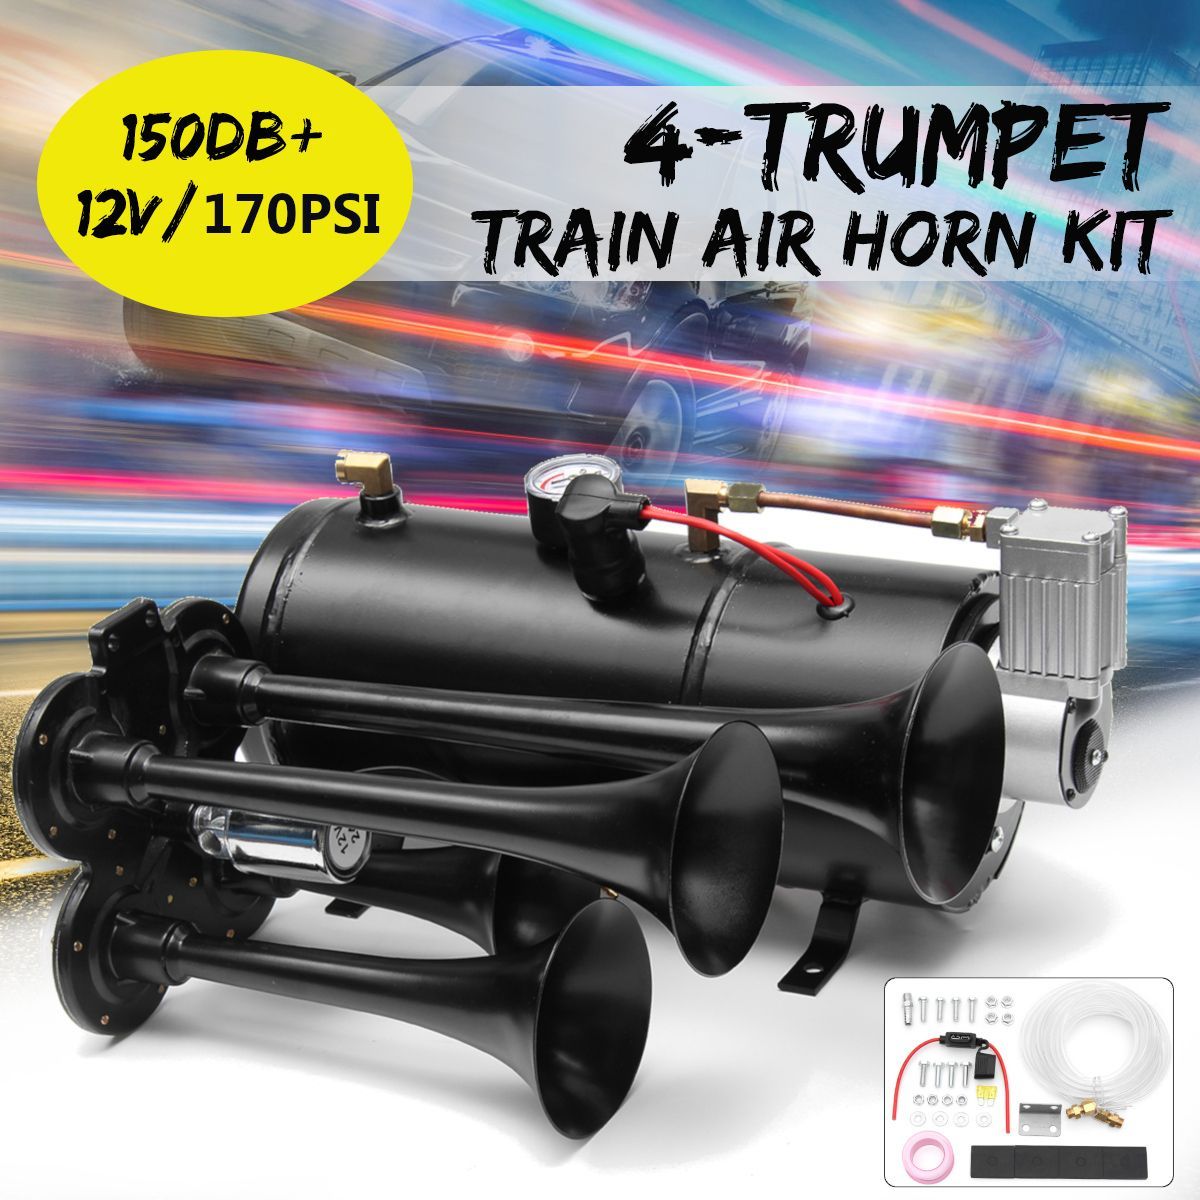 2-Trumpet-Train-Air-Horn-12V-Compressor-Tubing-150-dB-170-PSI-Kit-3L-for-Car-Truck-Campers-1402095